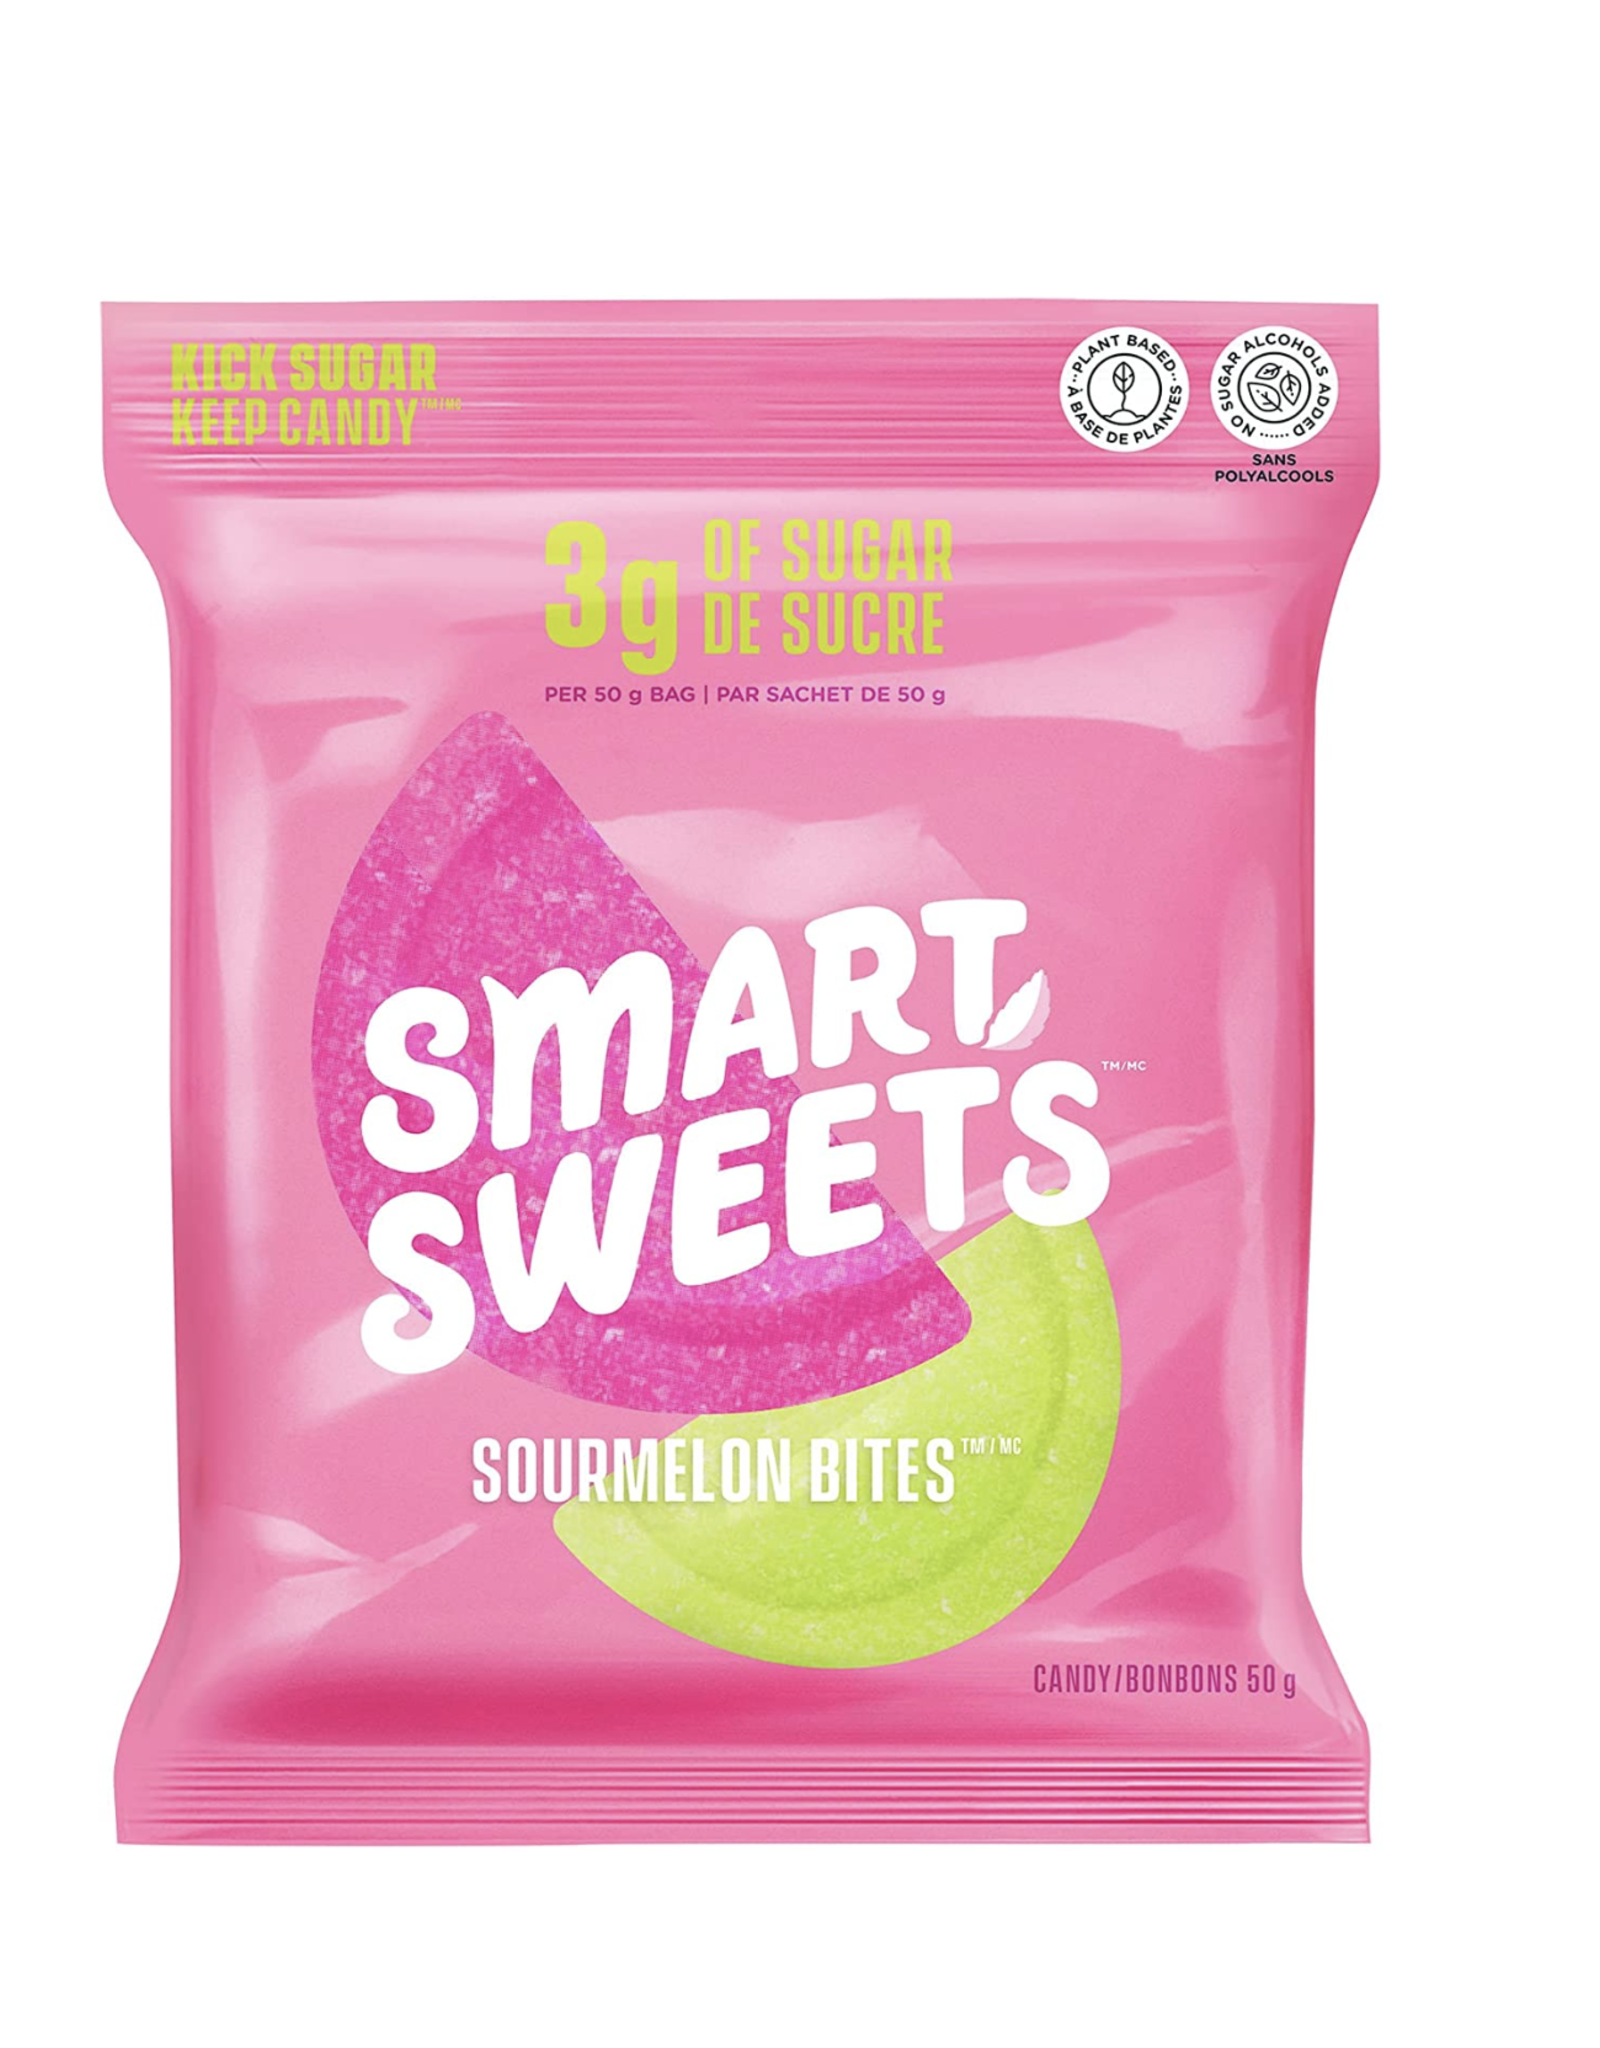 Smart Sweets Smart Sweets Watermelon